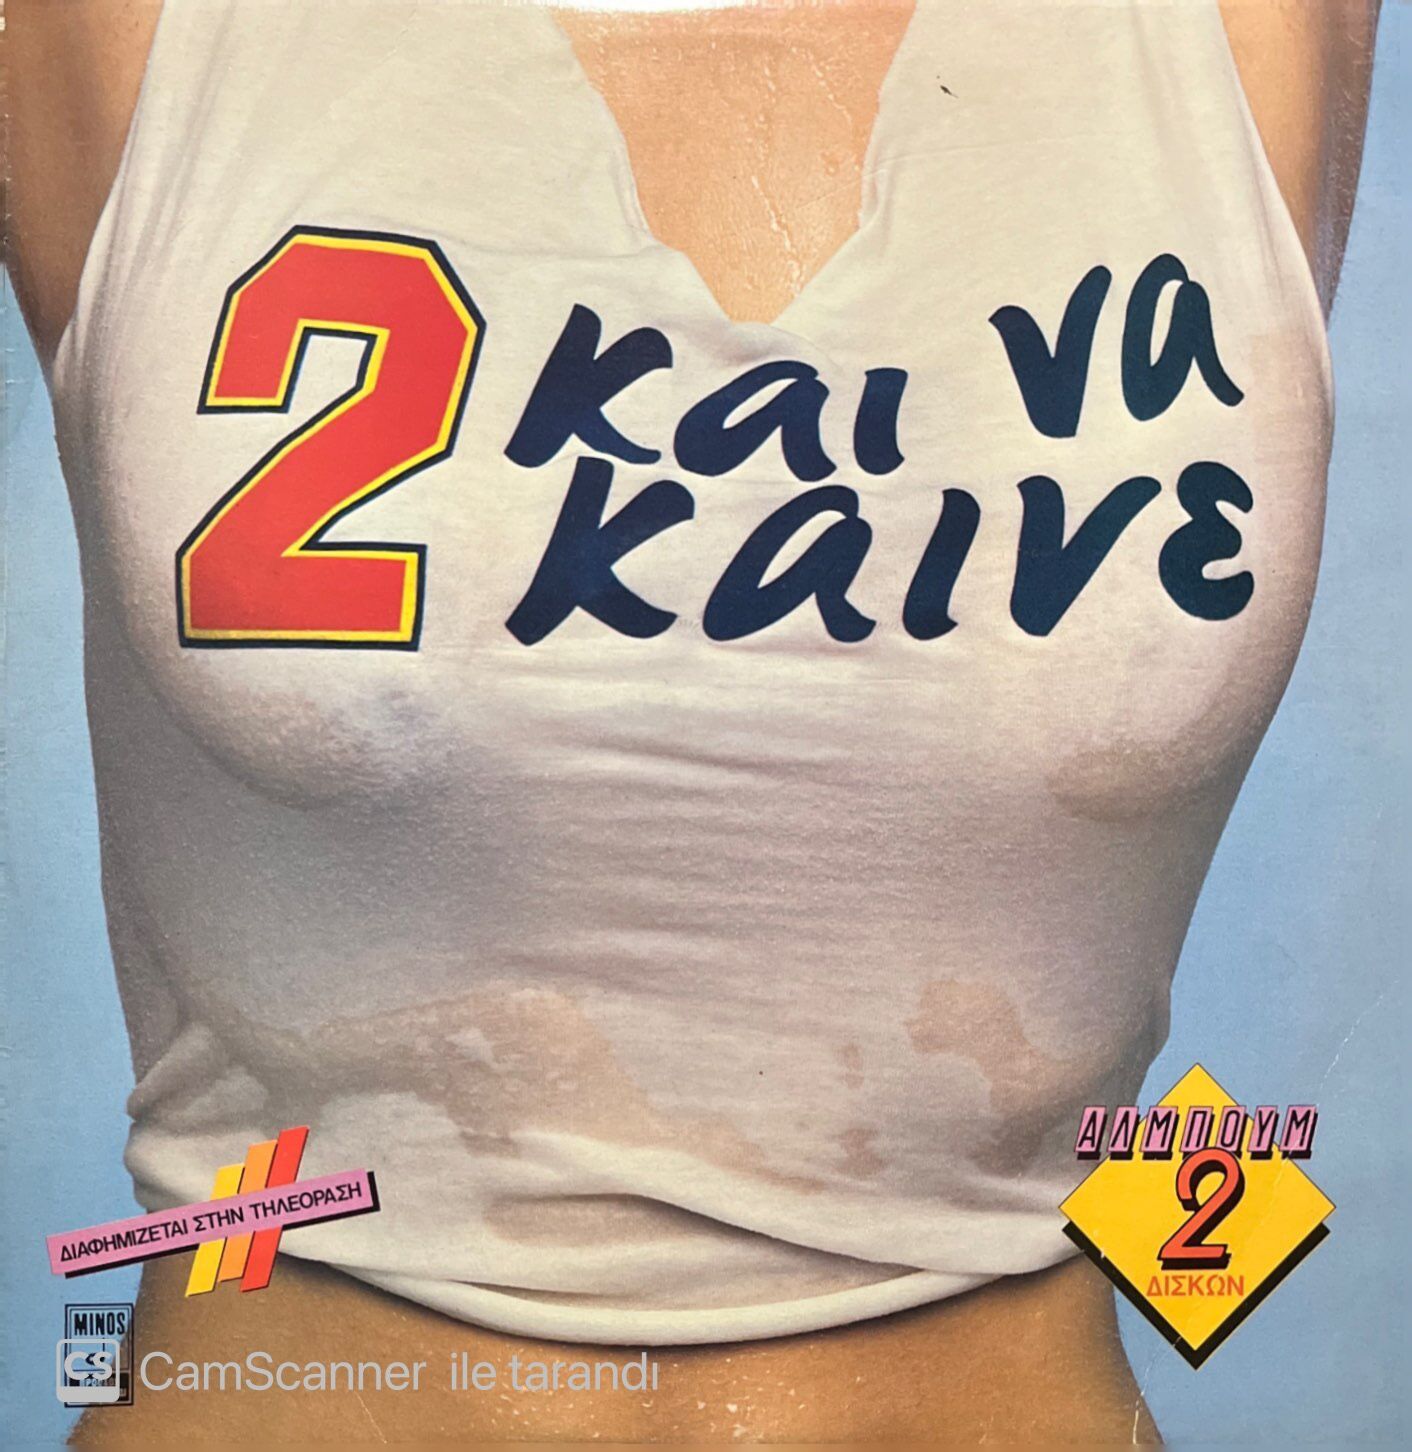 2 Kai Va Kaive Yunan Greece Double LP Plak